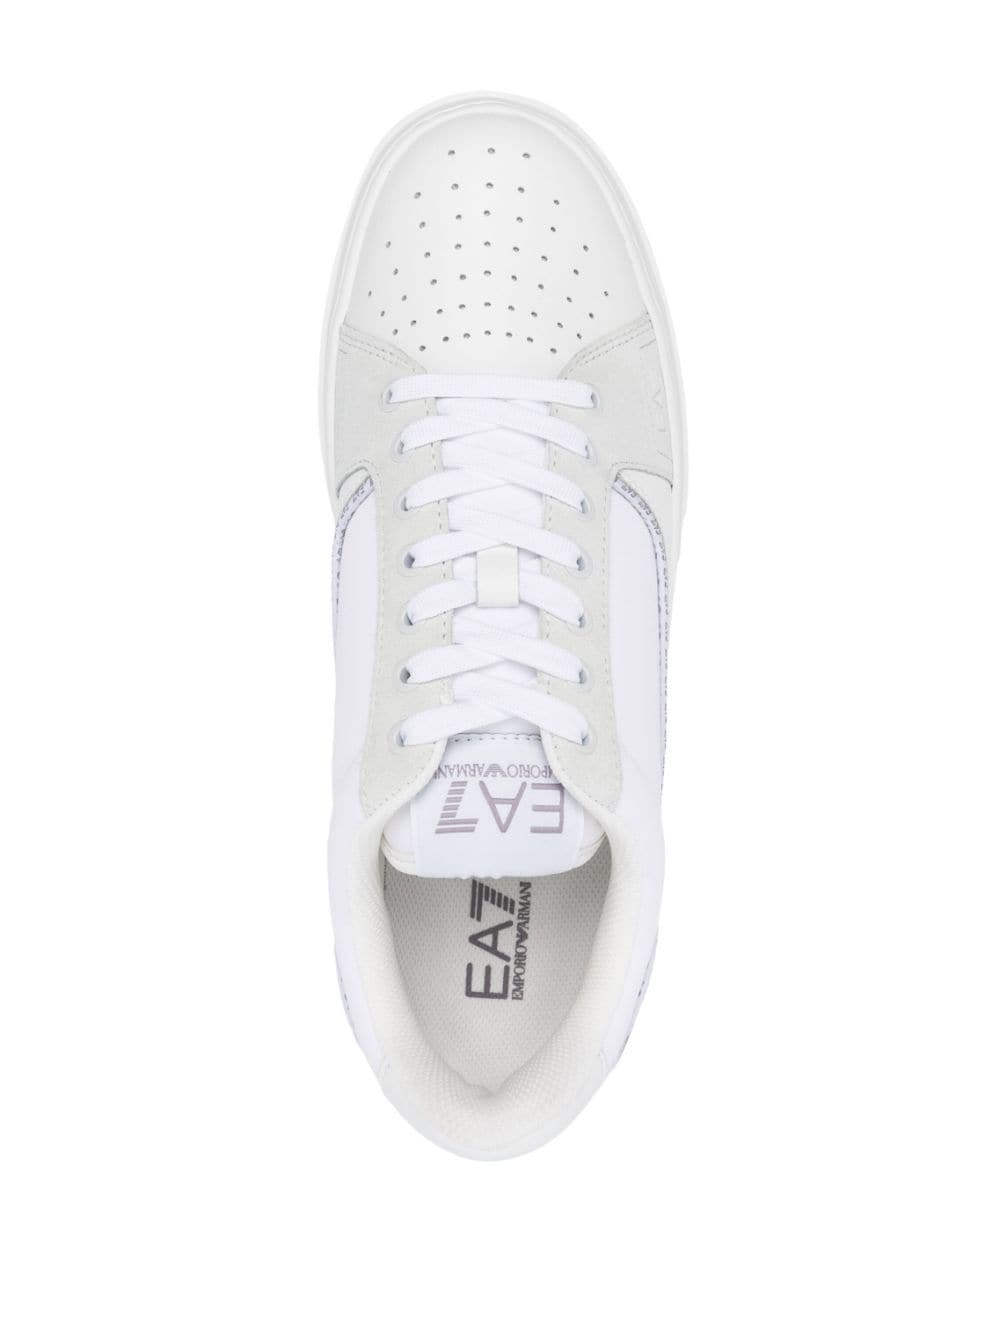 Ea7 Emporio Armani embossed-logo Leather Sneakers - Farfetch